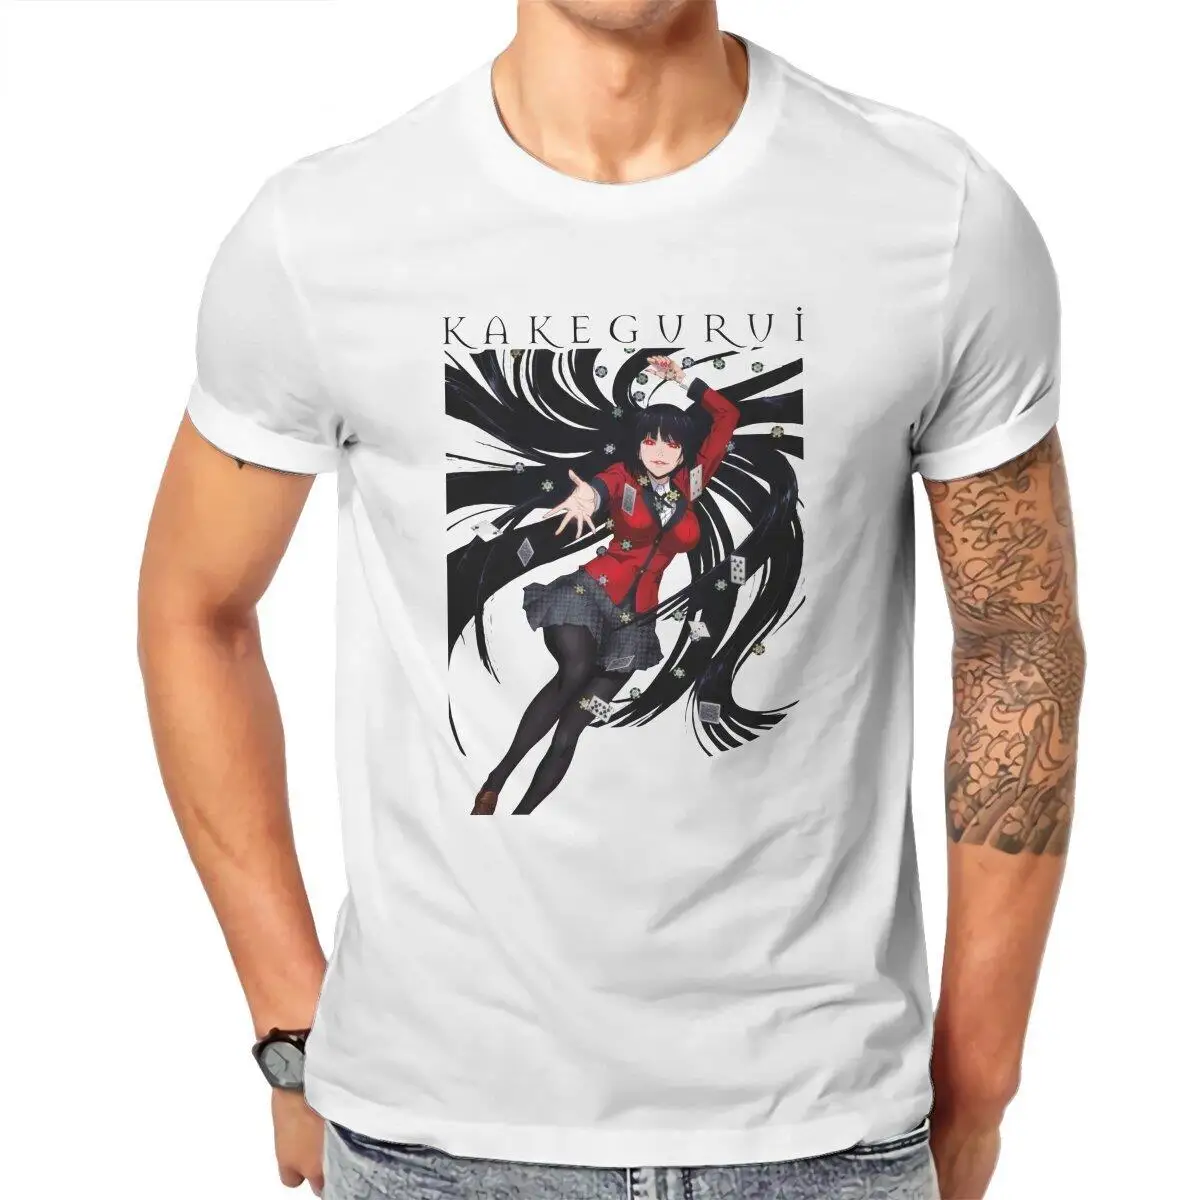 Kakegurui Yumeko  T Shirt for Men 100% Cotton Awesome T-Shirts Crewneck Japanese Anime Tee Shirt Short Sleeve Tops Adult